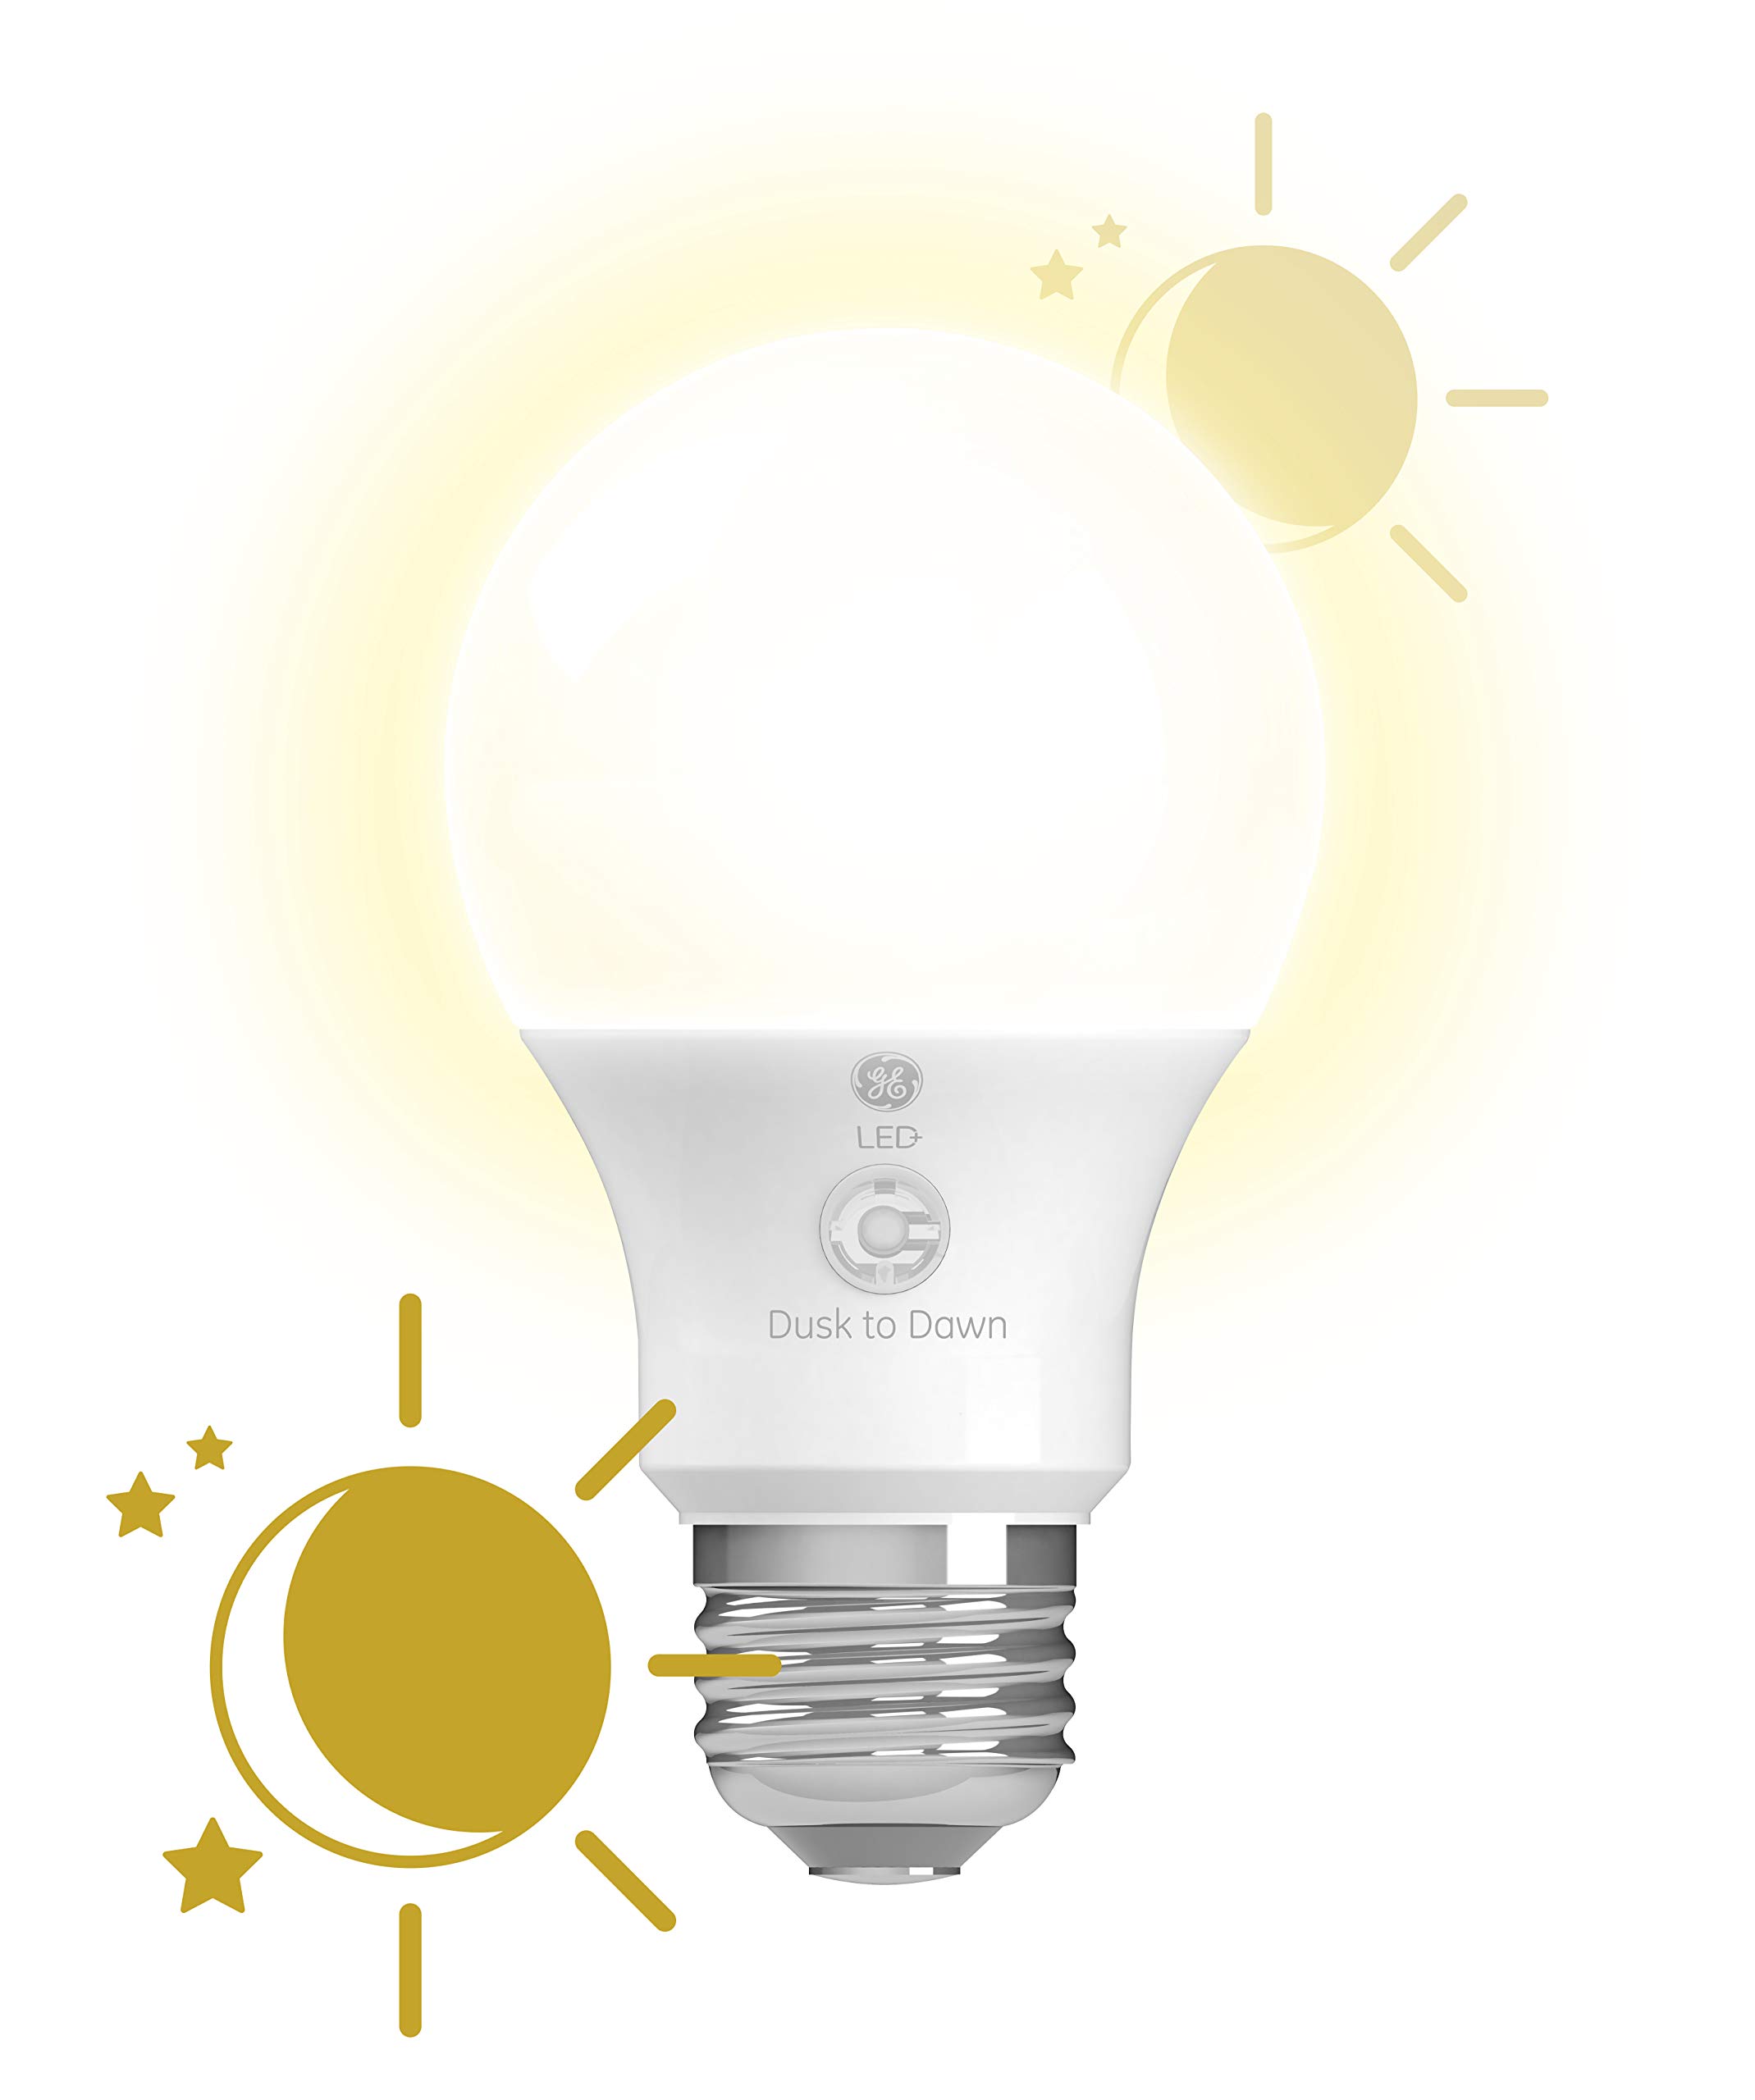 GE LED+ Dusk to Dawn Outdoor Light Bulbs, Sunlight Sensors, Soft White, Medium Base, 60 Watt Replacement Standard Bulb Shape (Pack of 2)